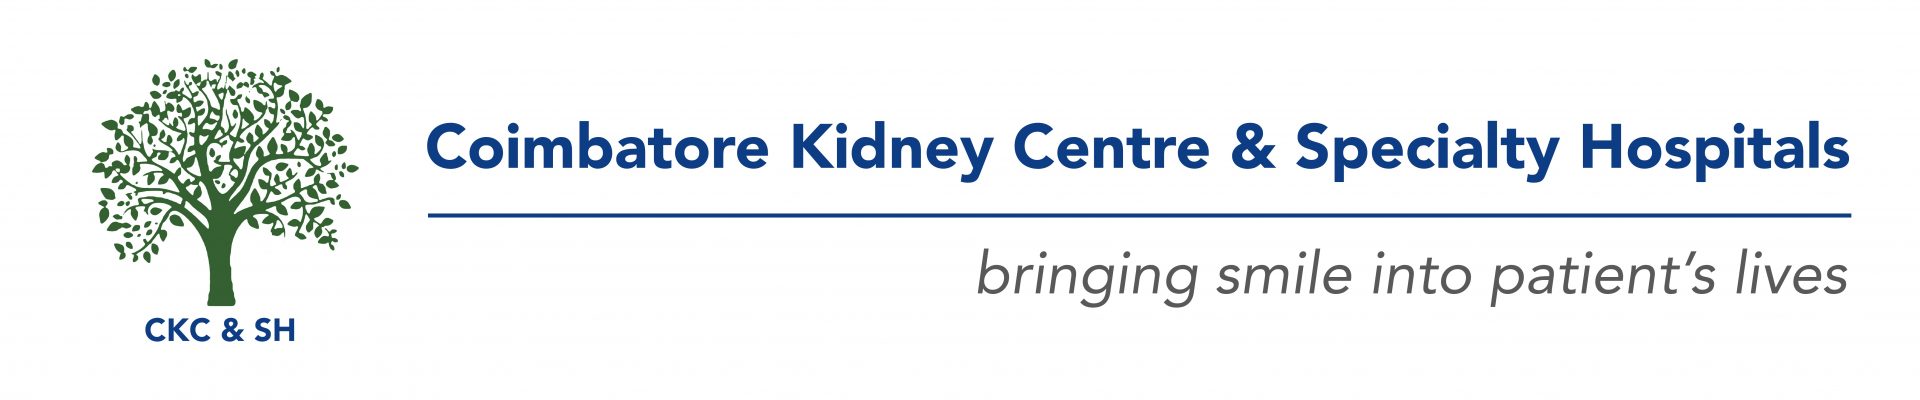 Coimbatore Kidney Centre & Specialty Hospitals